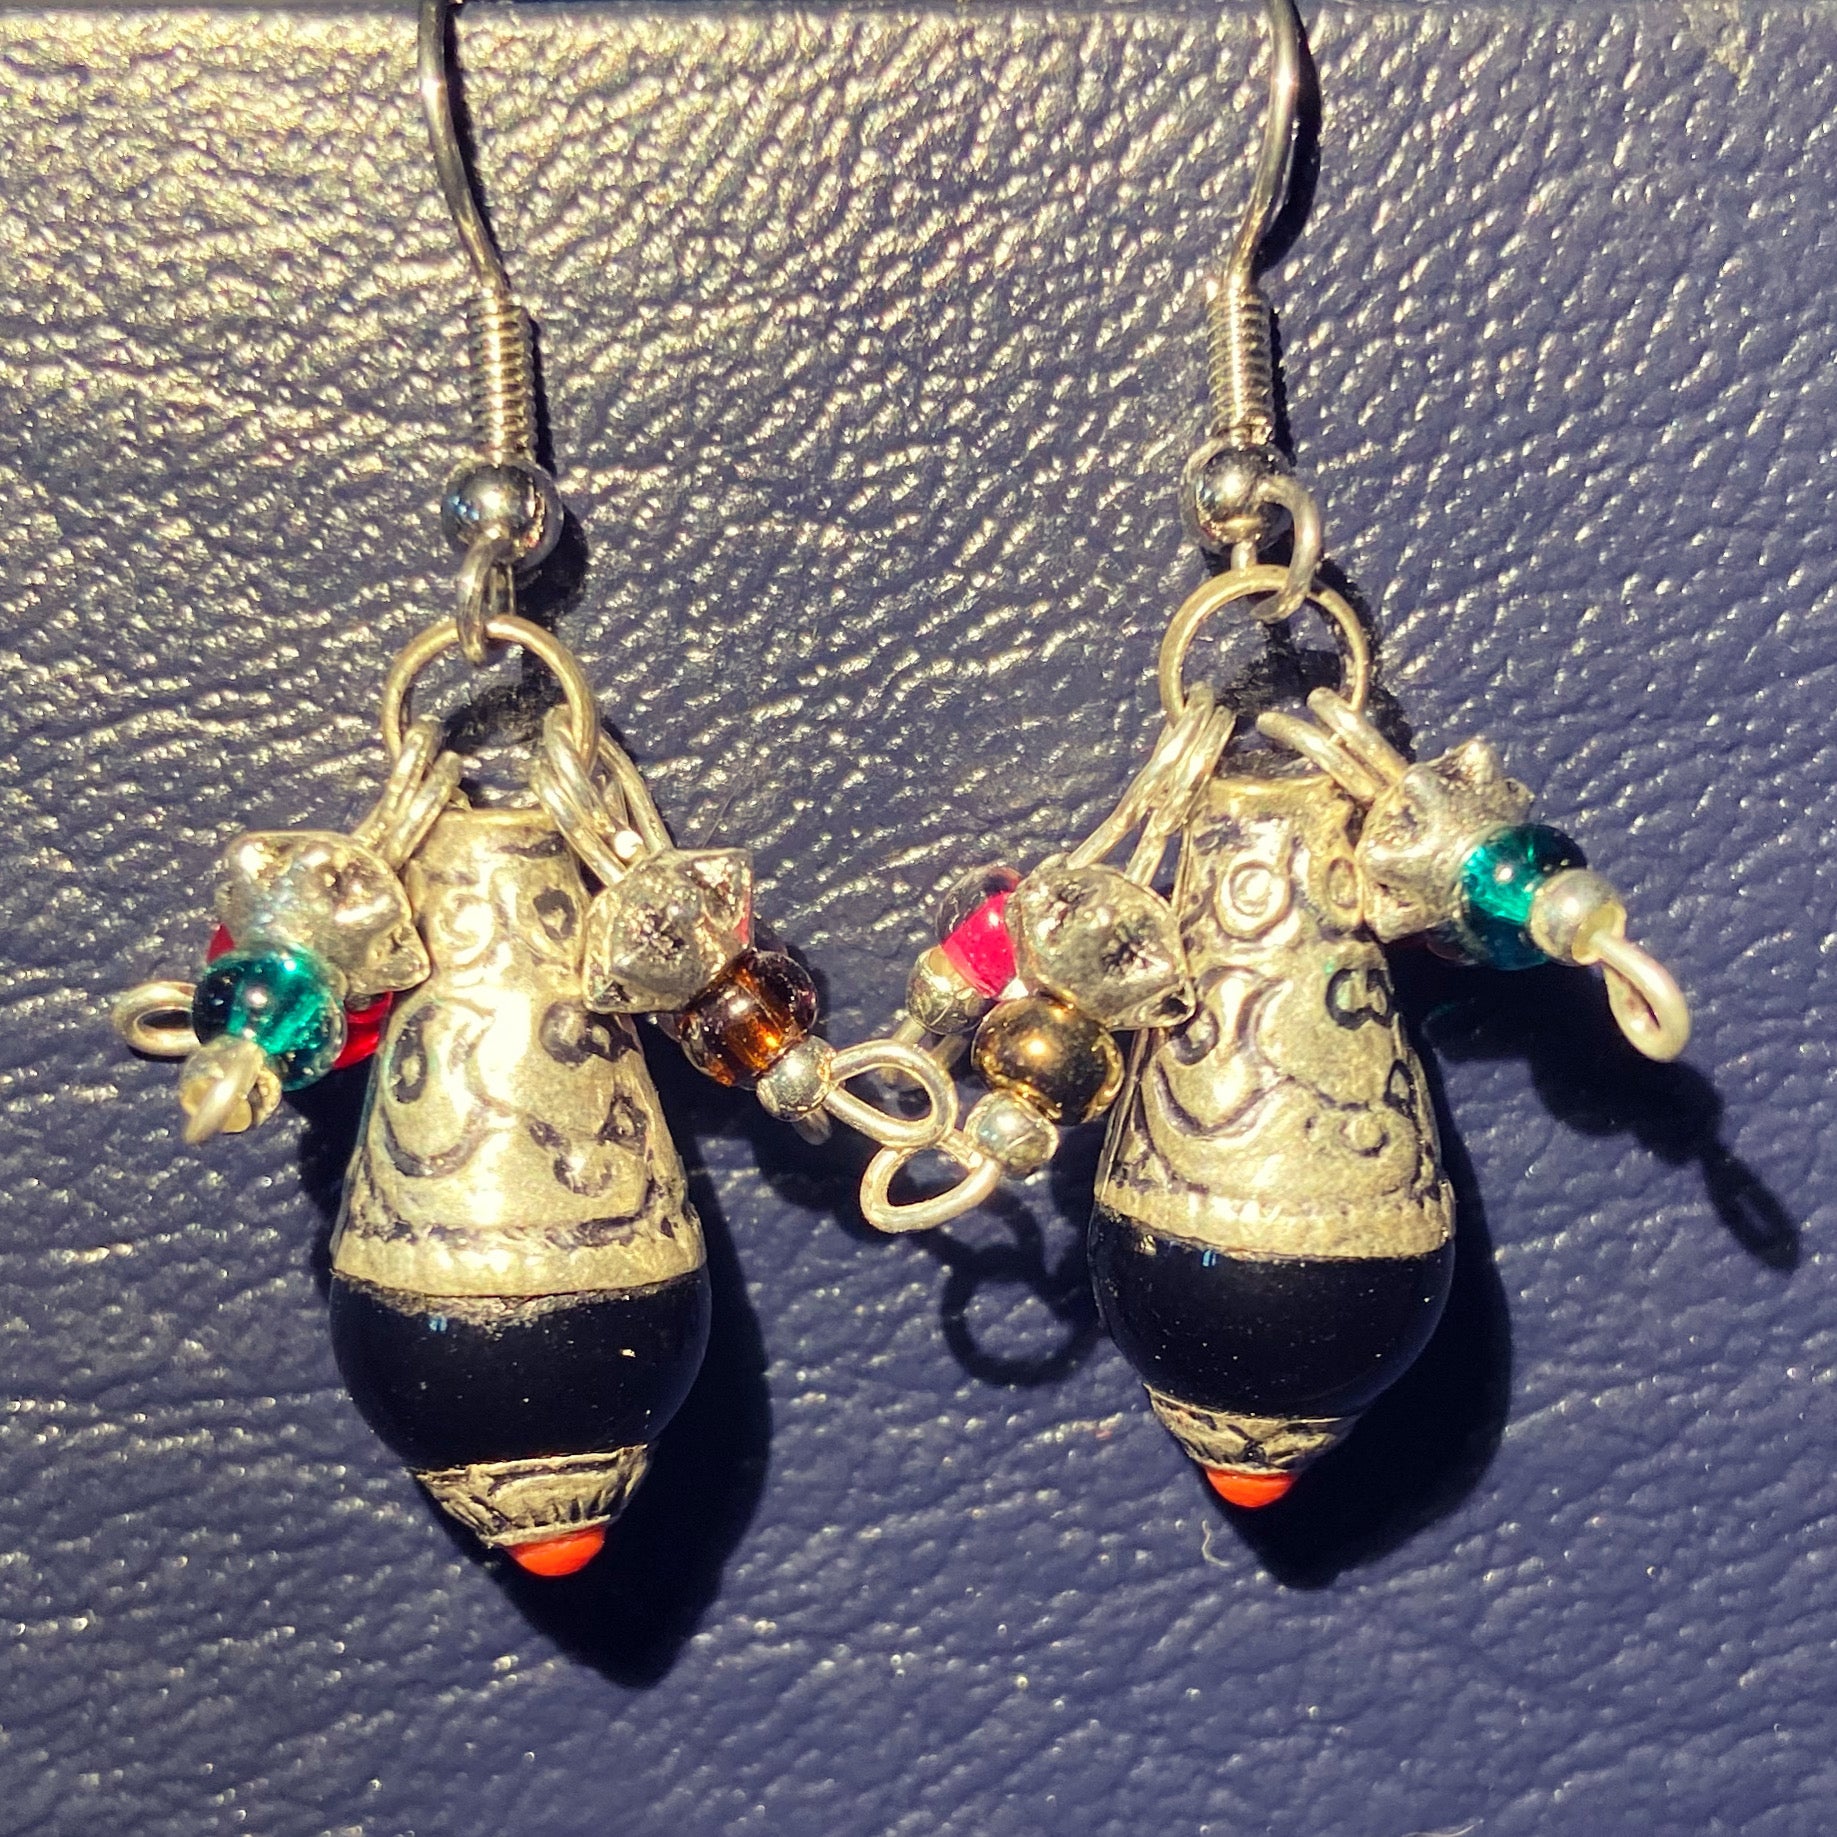 Beijo Earrings 4: Tibetan Handmade Beads, Metal, & Czech Glass. Stainless Steel French Hooks